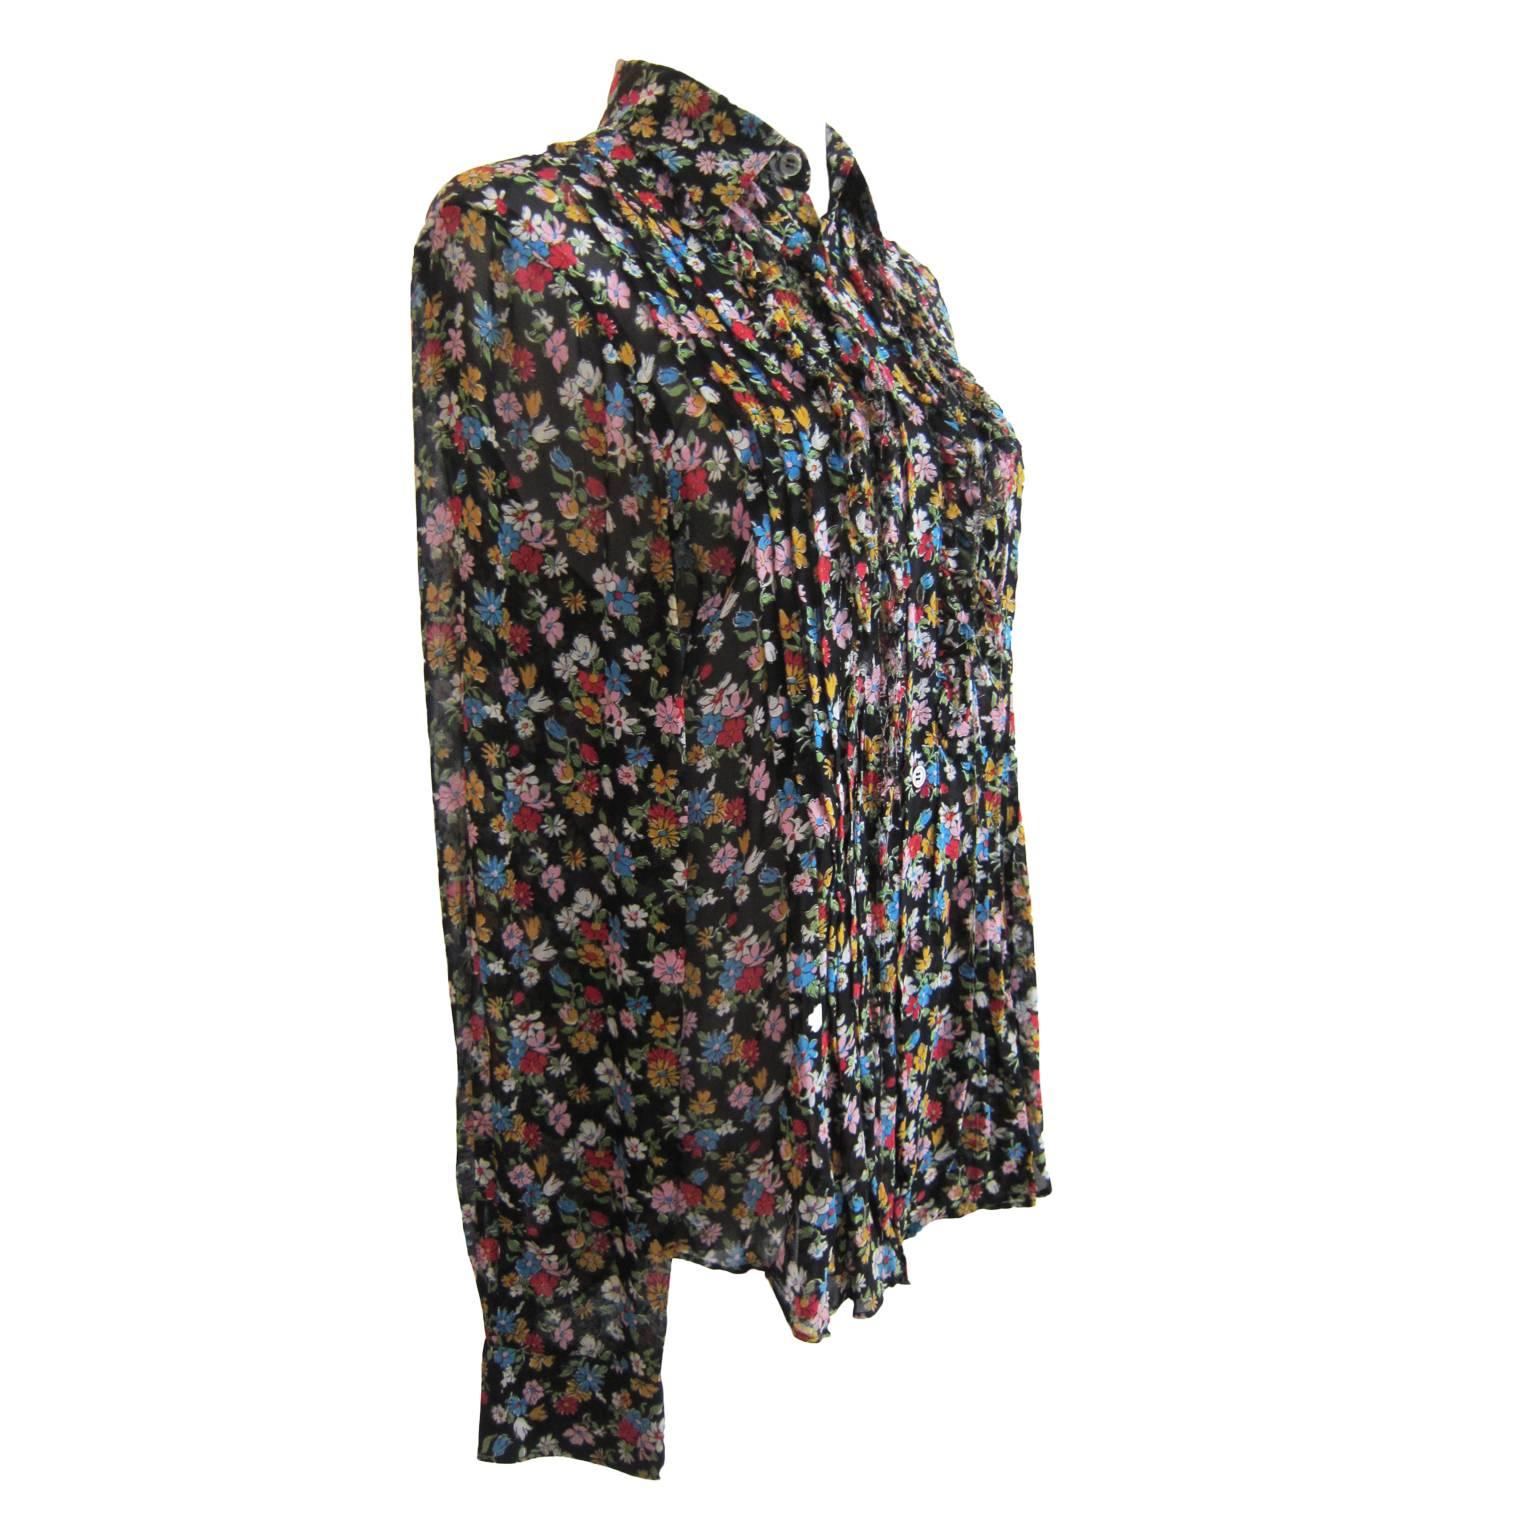 Comme des Garcons tricot line flower blouse from AD 2005. With fray edge ruffles front detail.
Size:  M
Measurements : 
Shoulder :  39 cm 
Sleeve :  63 cm 
Under arm :  43 cm 
Length :  67 cm 

